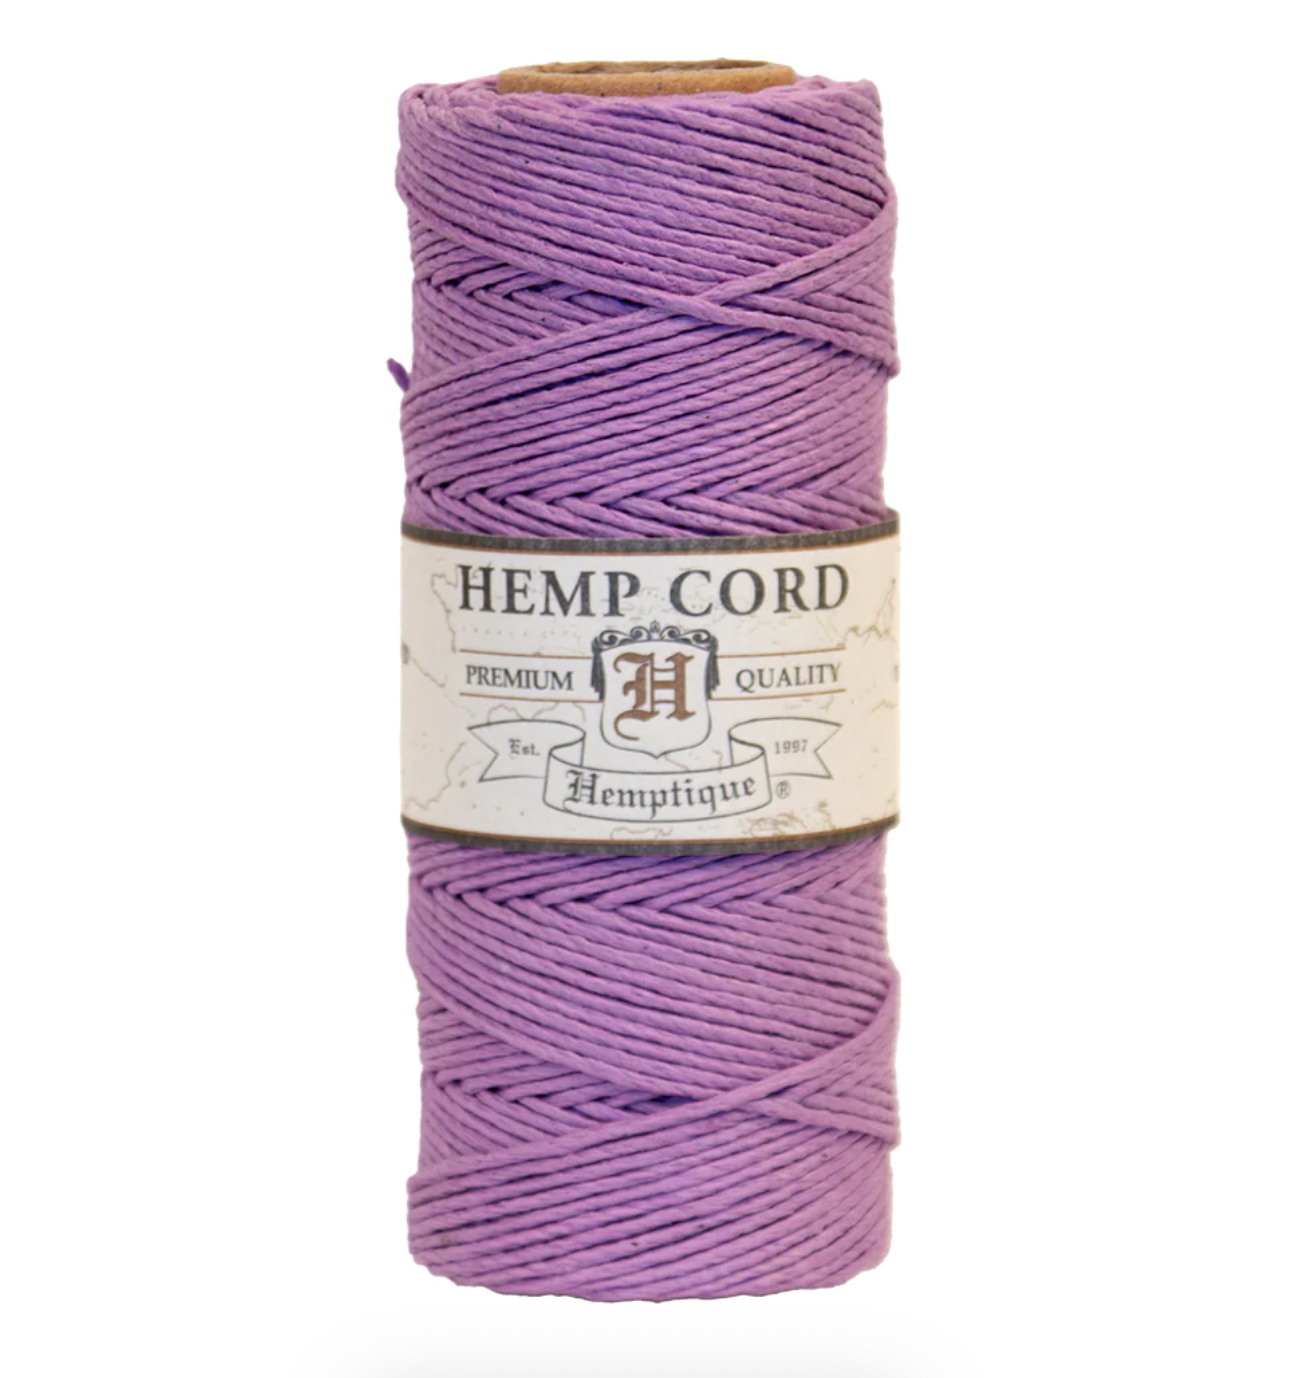 Hemptique Hemp Craft Cord/Twine. Available At Hemp Store One Love Hemp Co. At 1449 Kingsway, Vancouver, B.C., Canada